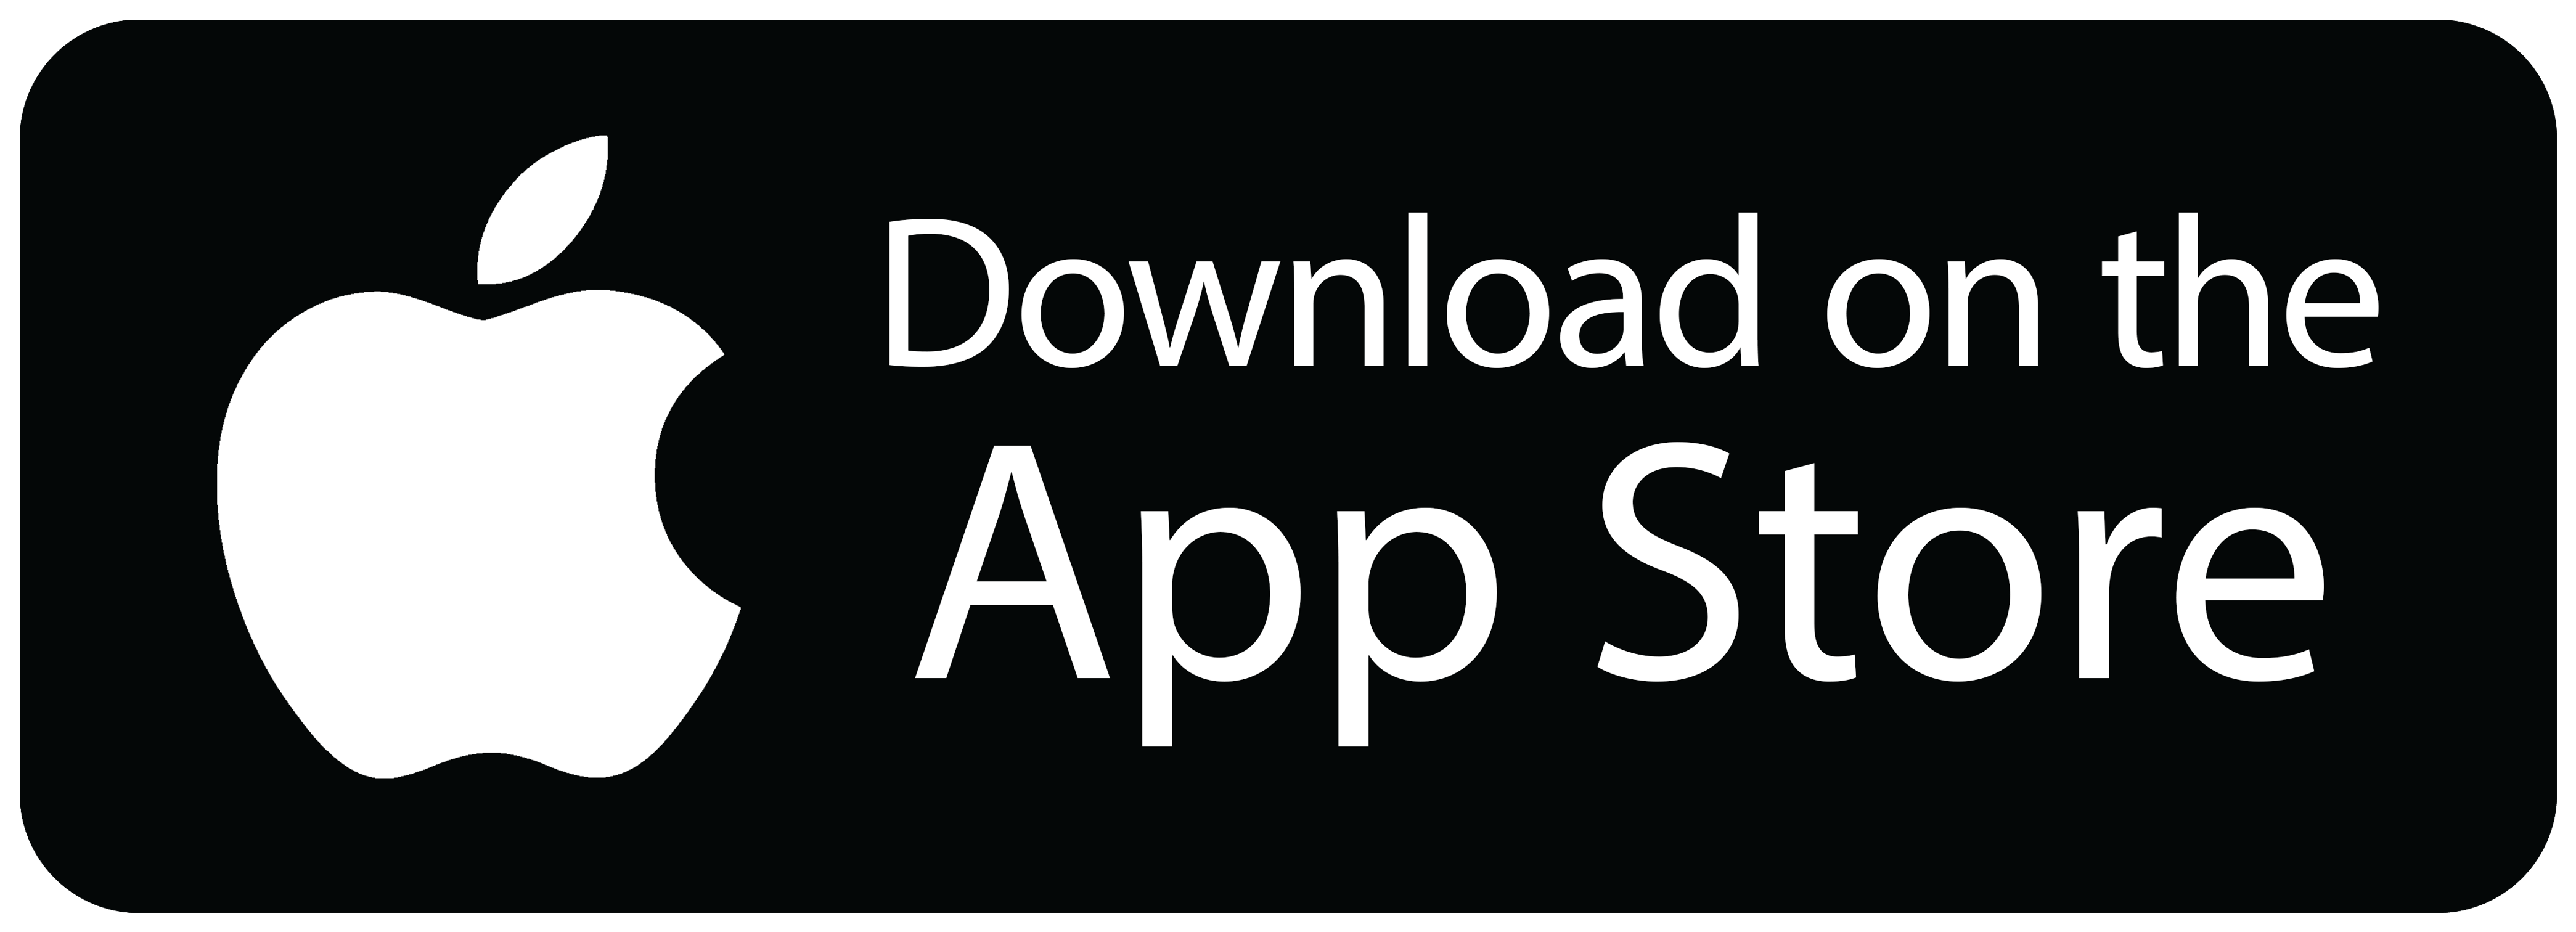 223-2231228_app-store-apple-transprent-download-on-apple-store